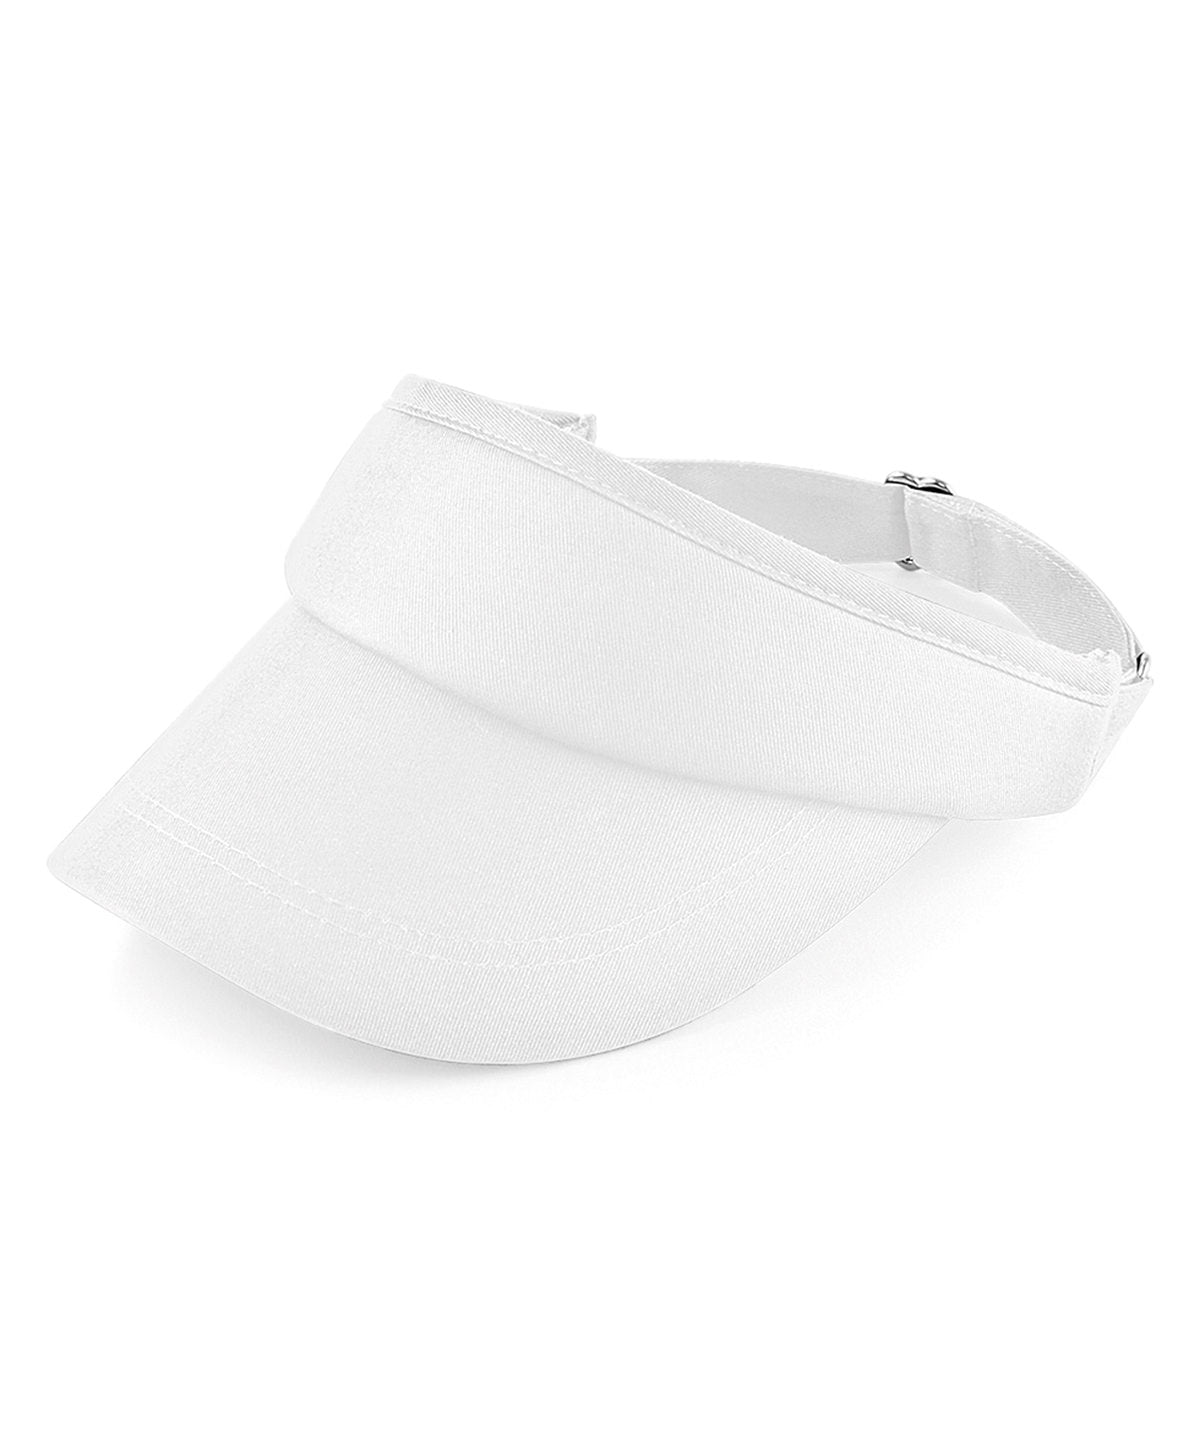 Personalised Caps - White Beechfield Sports visor